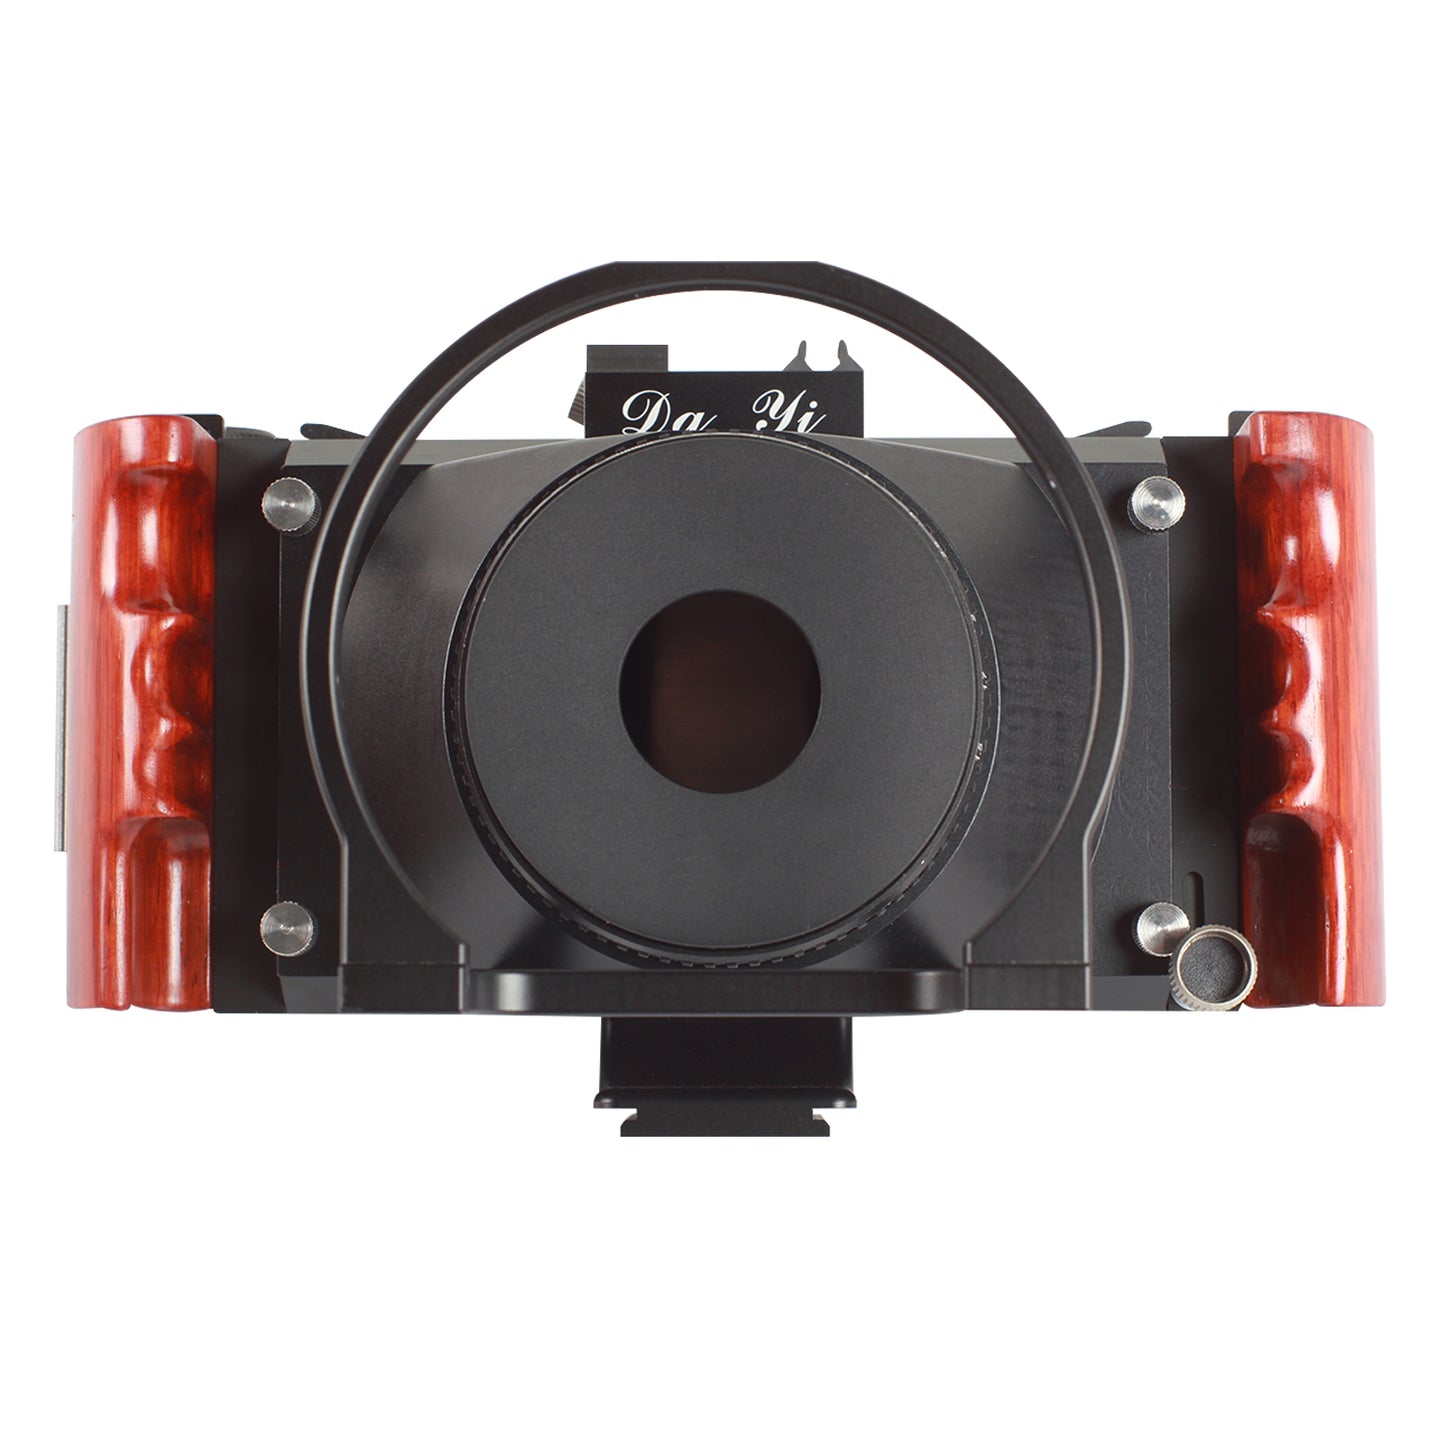 Nuova fotocamera professionale DAYI S-IIA 6x17 6x14 6x12 Panorama Shift multiformato